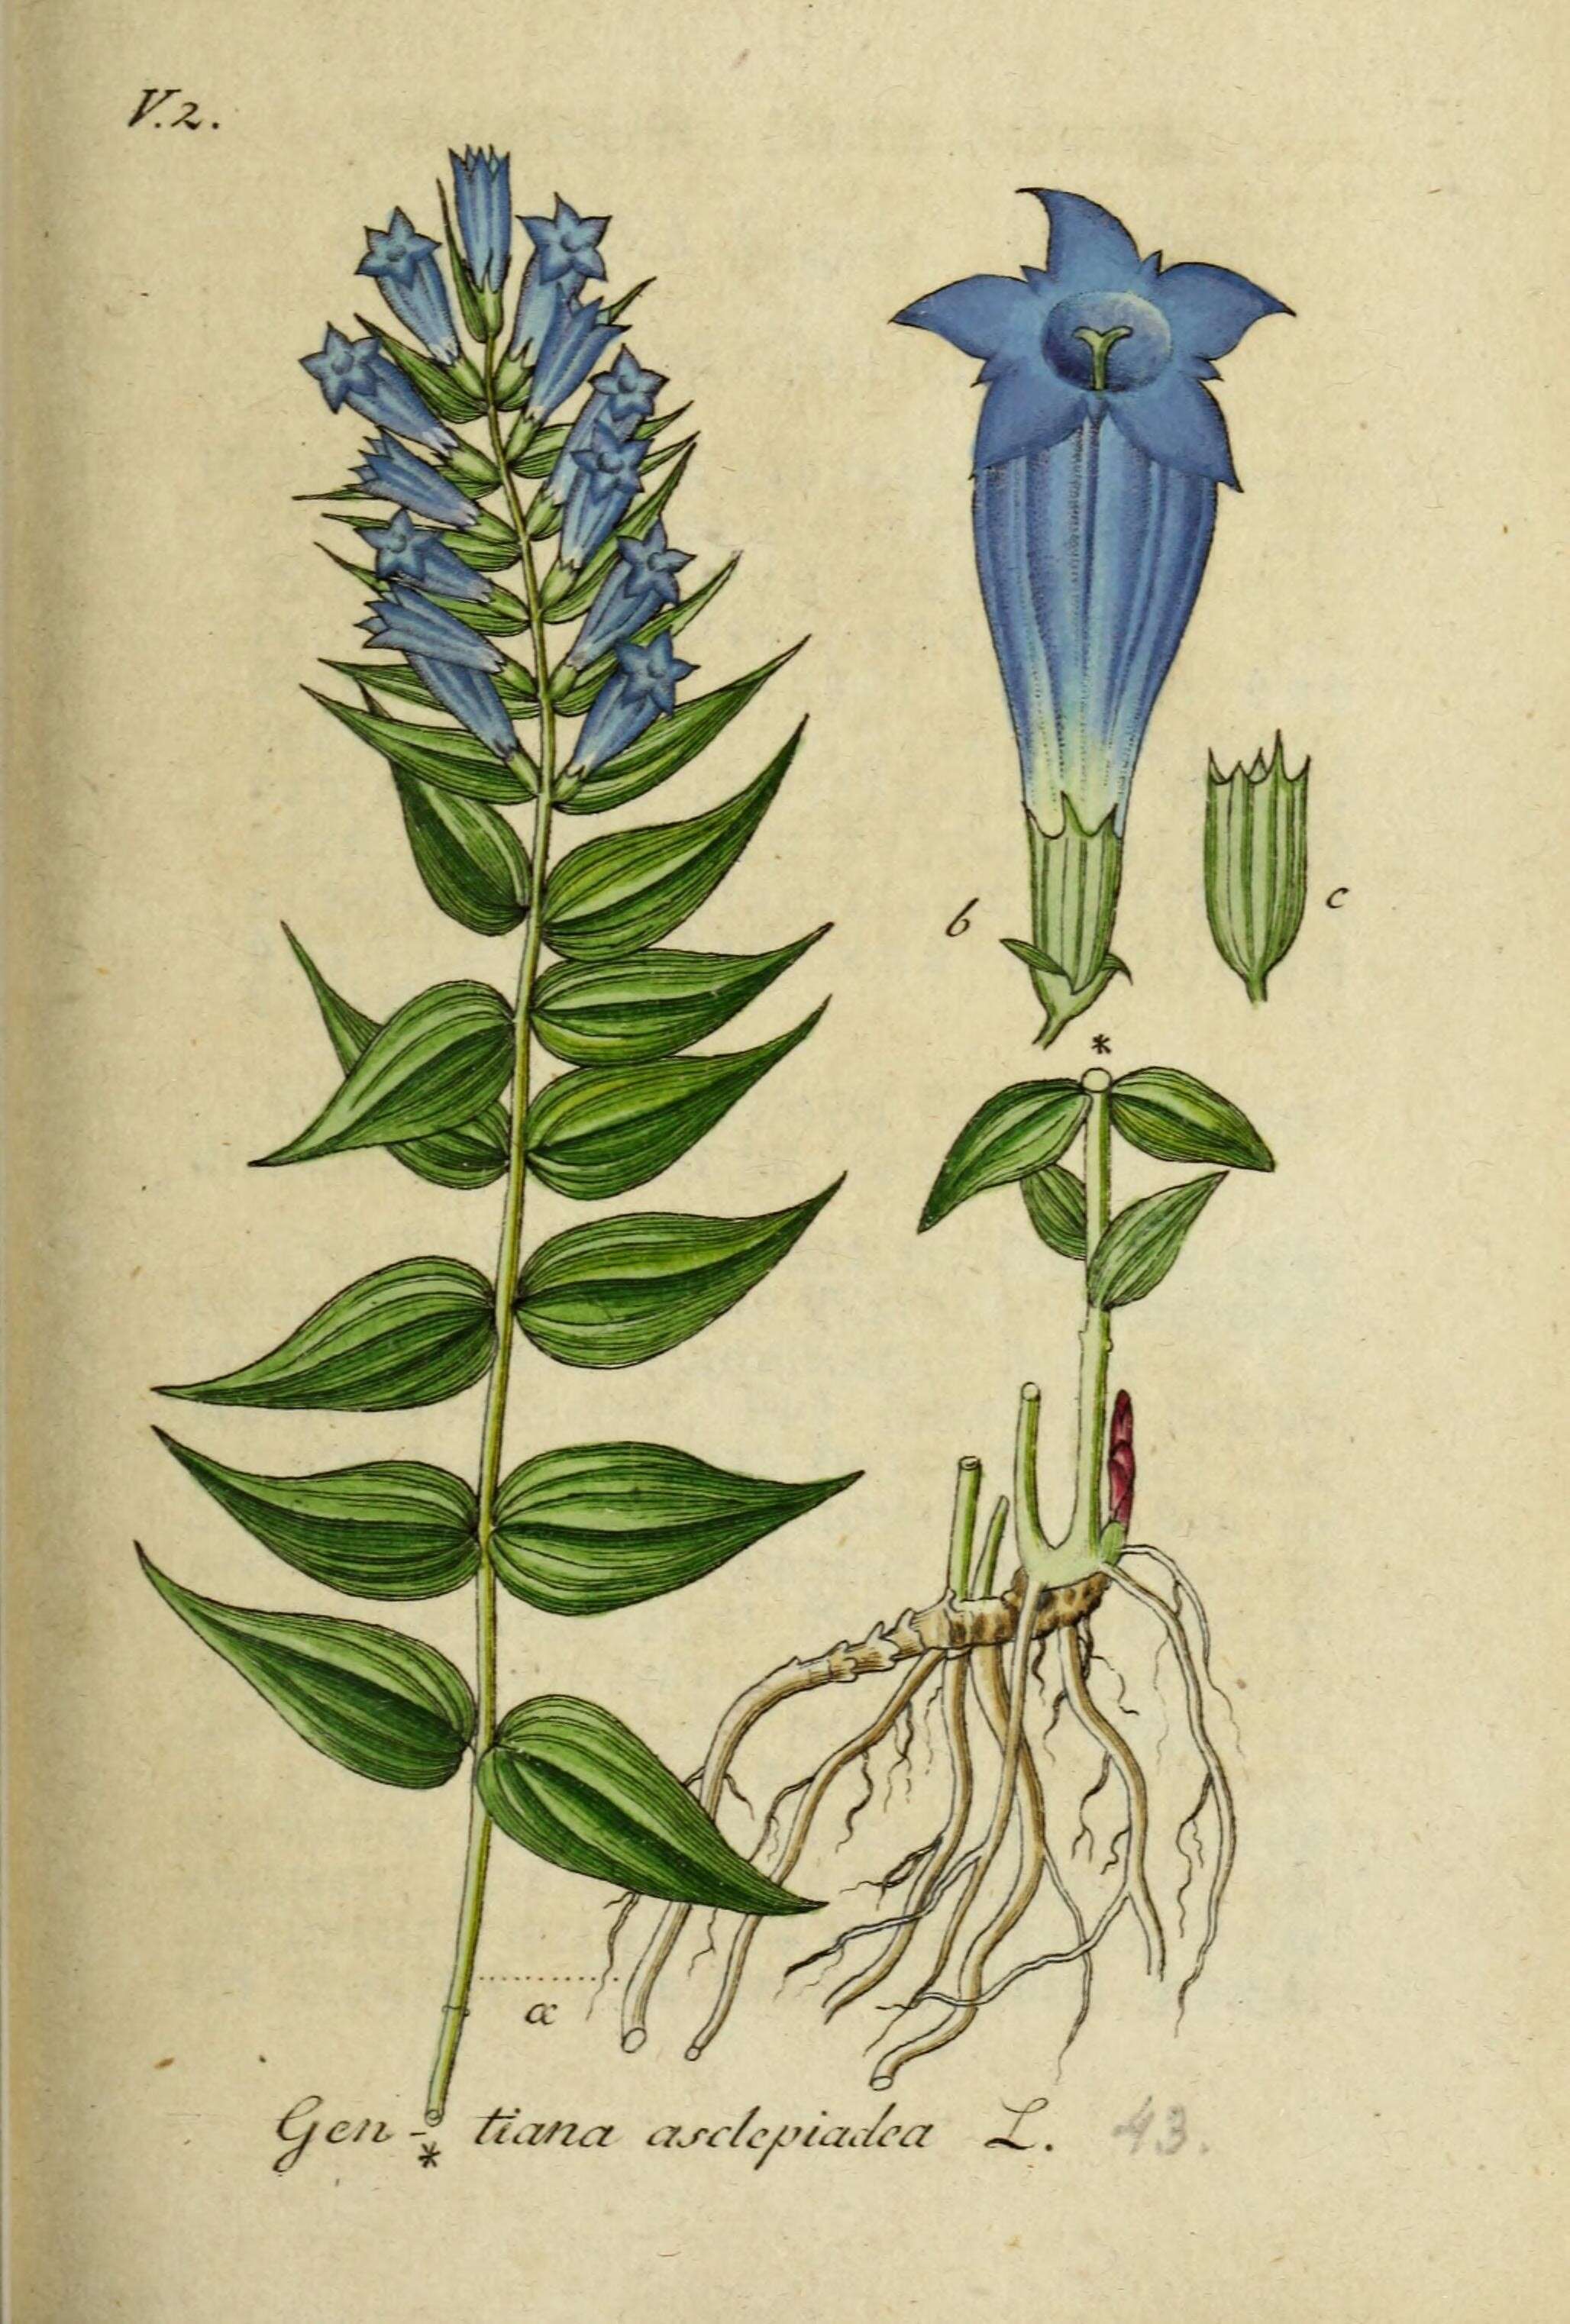 Image of Gentiana asclepiadea L.